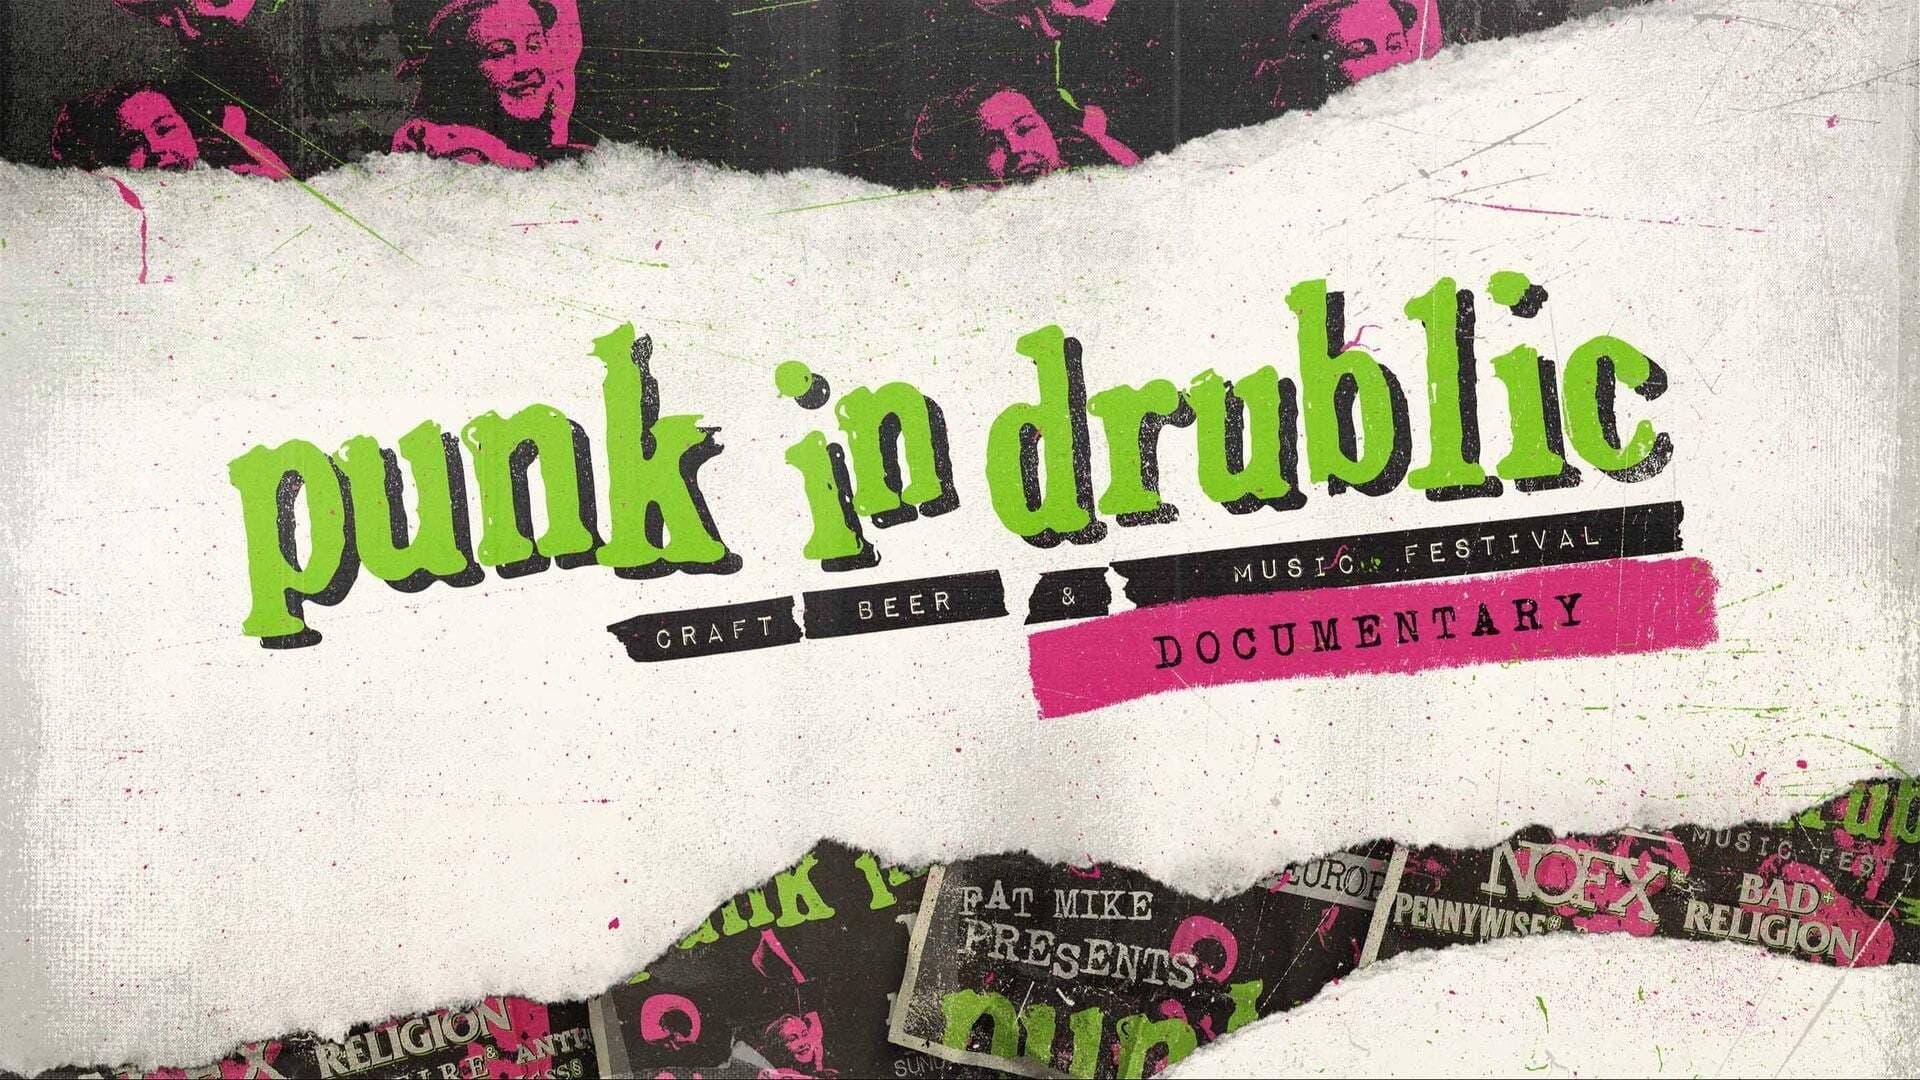 Punk in Drublic Documentary backdrop